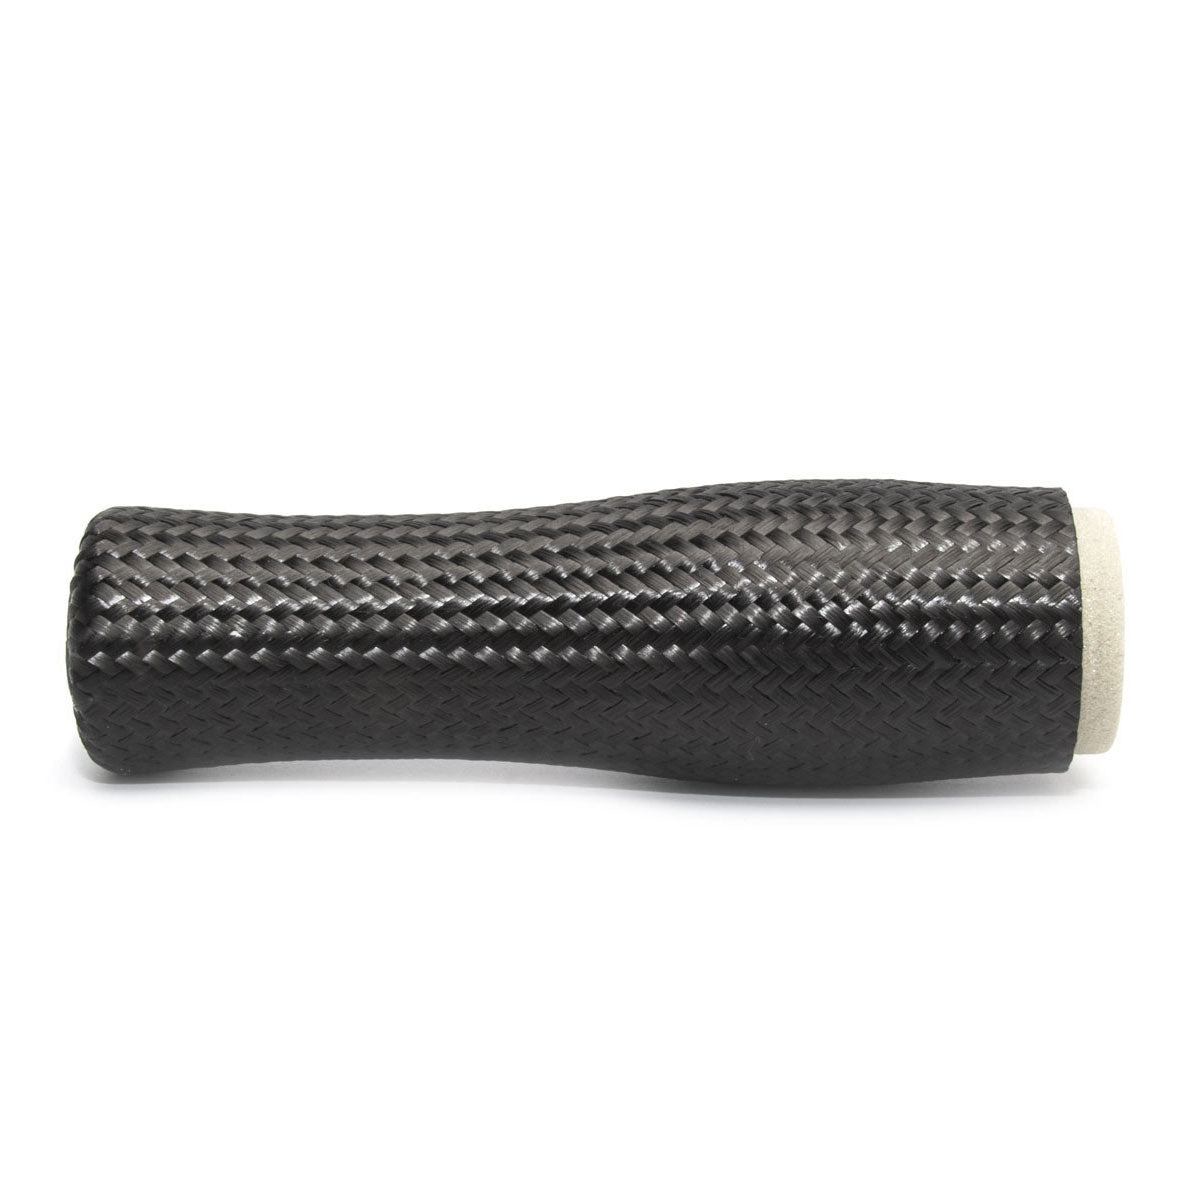 CFX Composite Carbon Fiber Grips - Casting Split Grip with Taper TG387